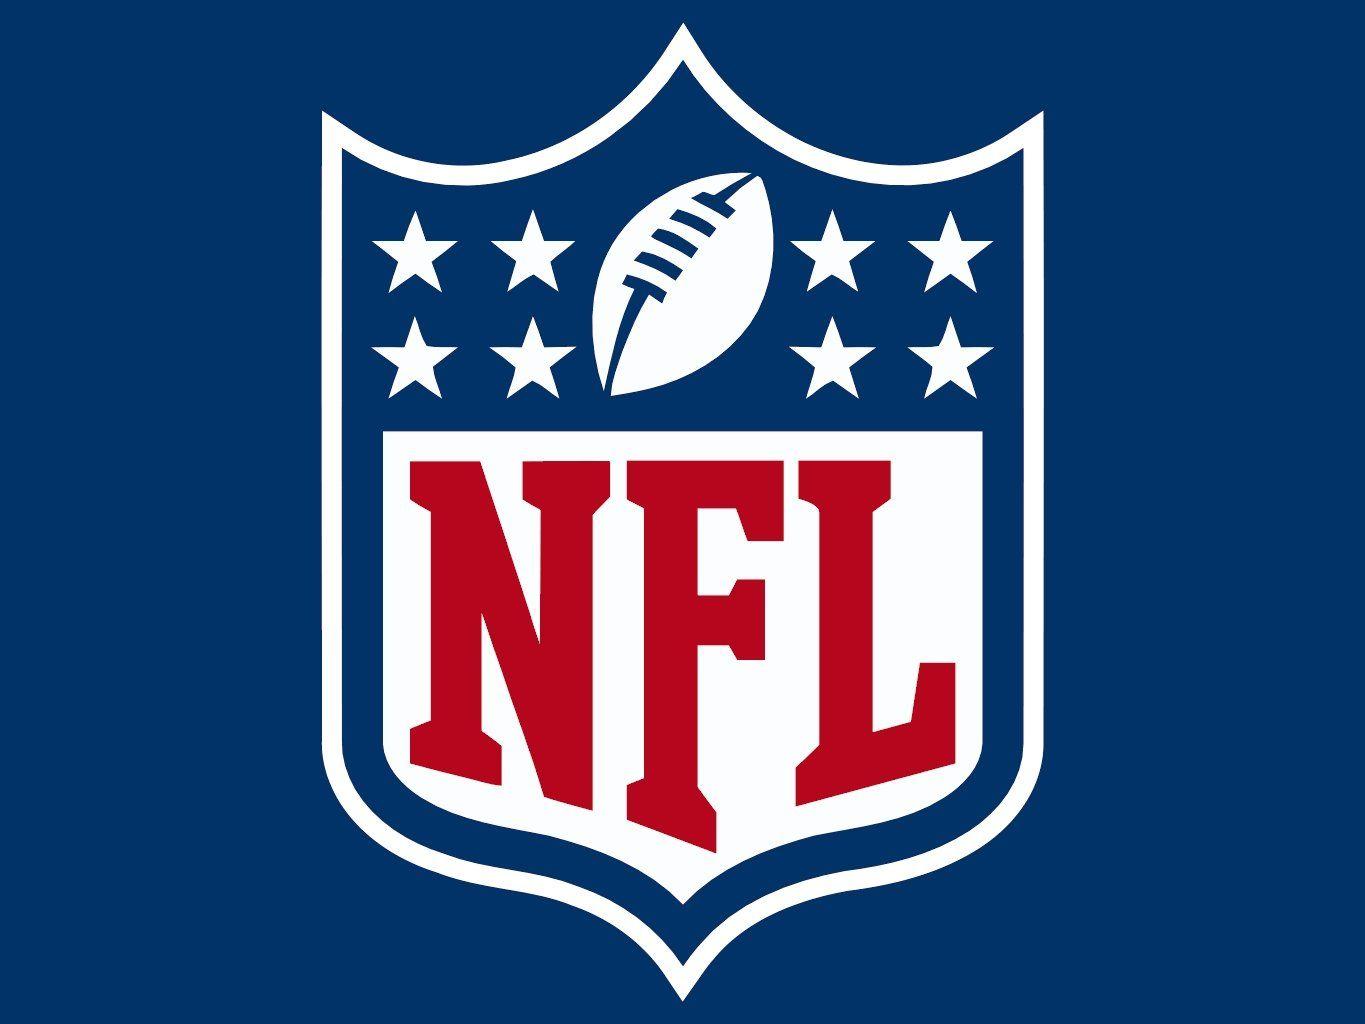 NFL Logo - NFL Logo Wallpaper. NFL Logo Wallpaper. NFL, Football, Nfl logo